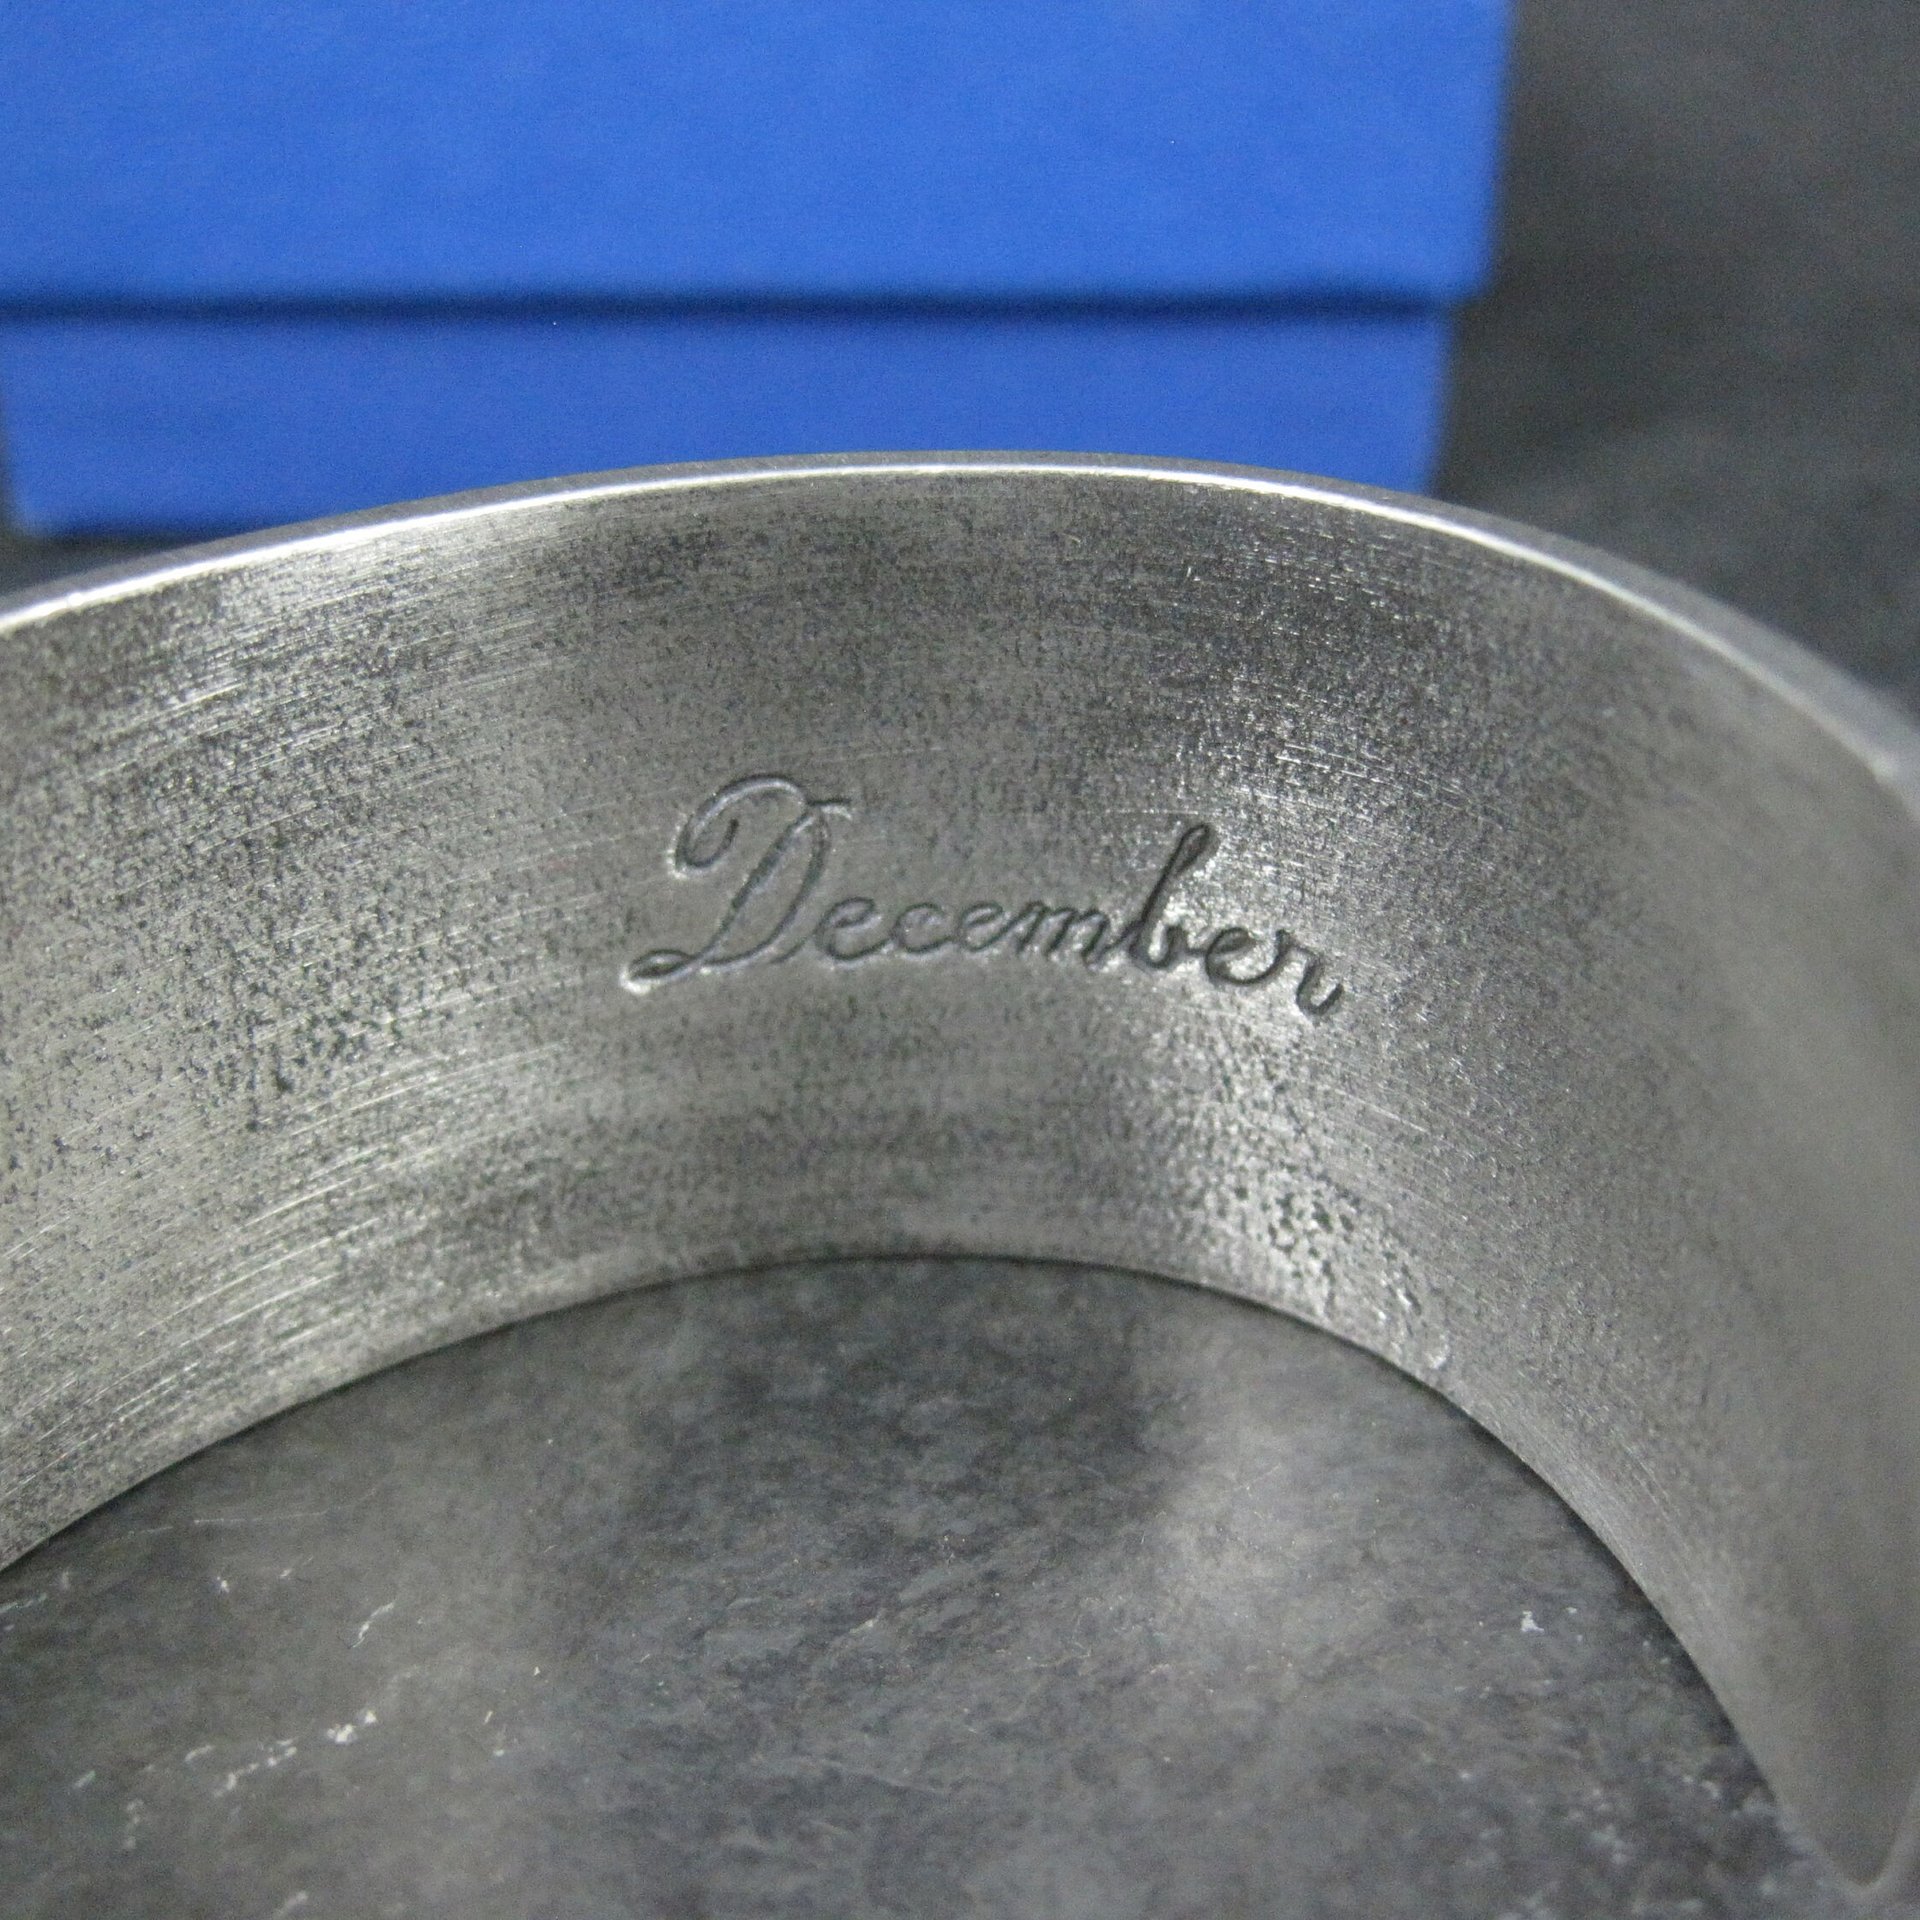 December Birthday Cuff Bracelet Salisbury Pewter 6.5 Inches